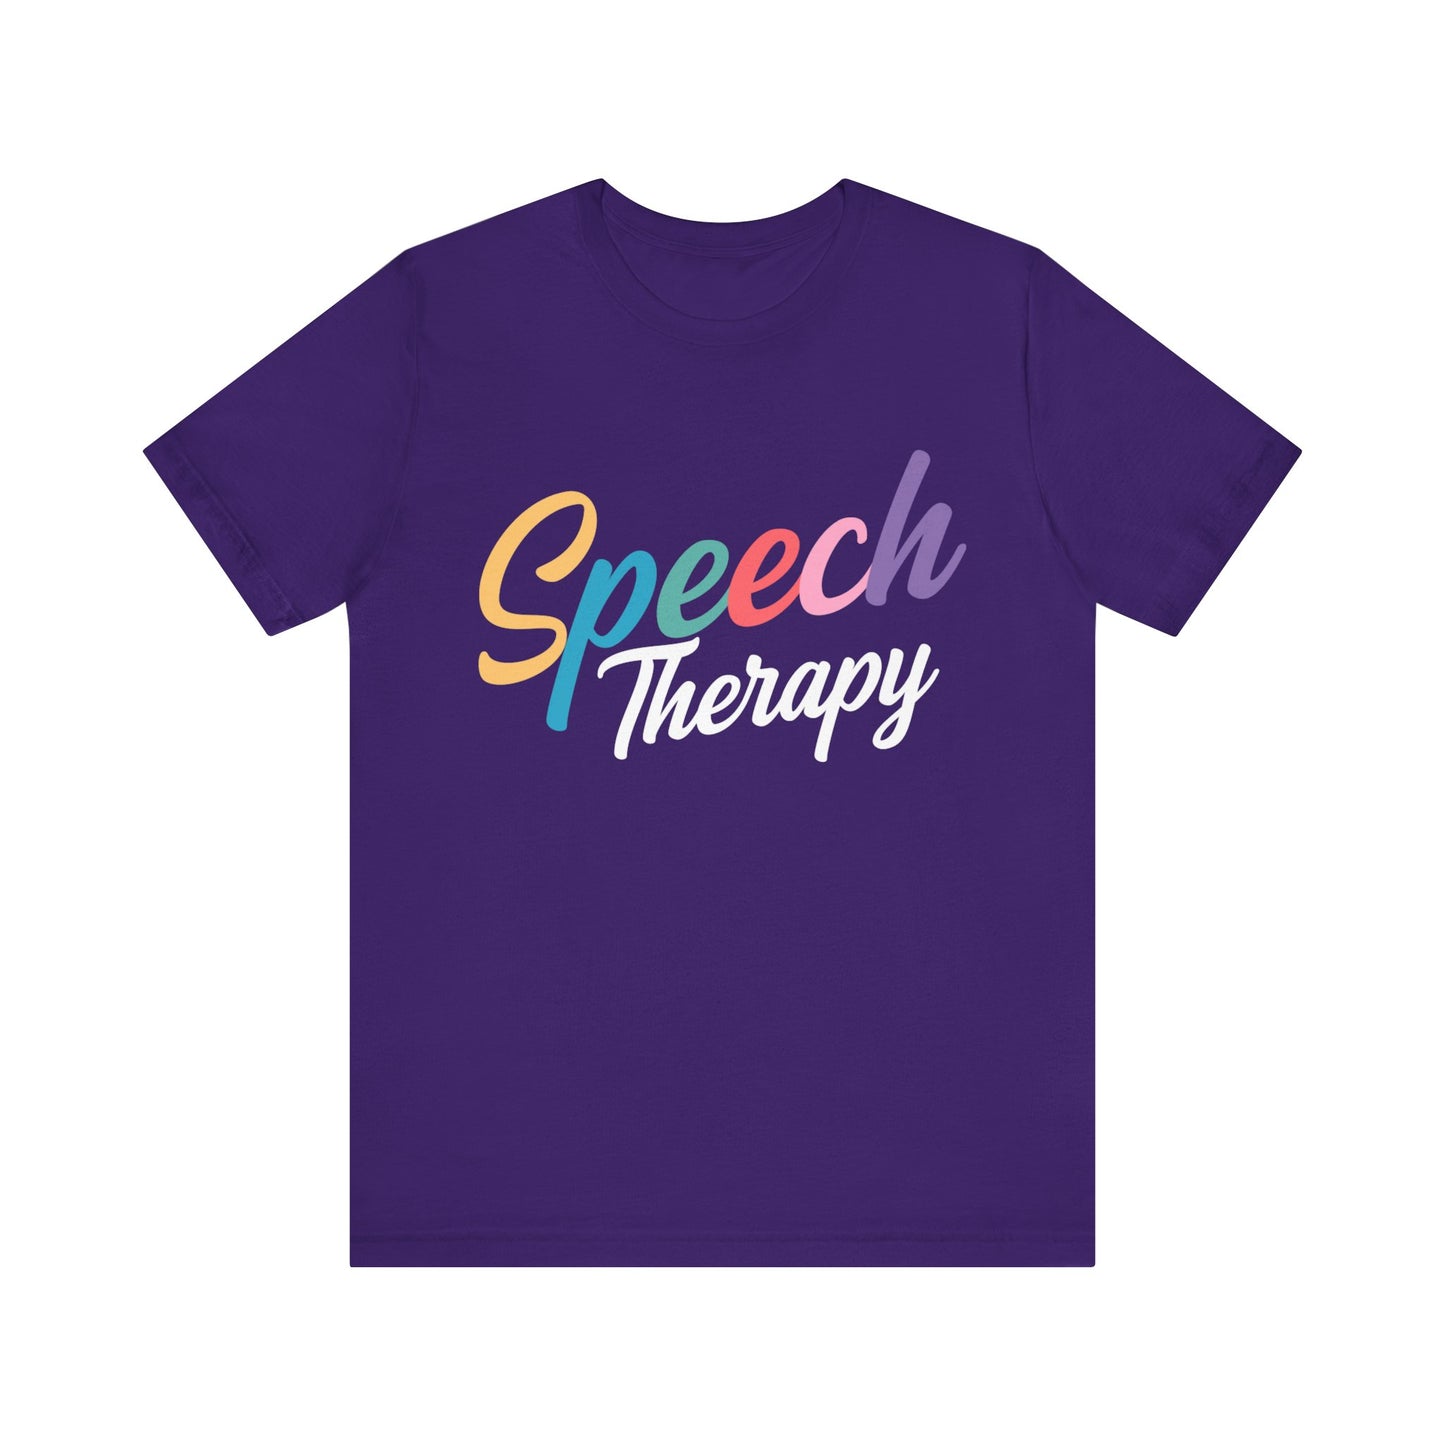 Speech Therapist, Speech Language Pathologist Shirt, SLP Shirt, Therapist Shirt, Pathologist Shirt